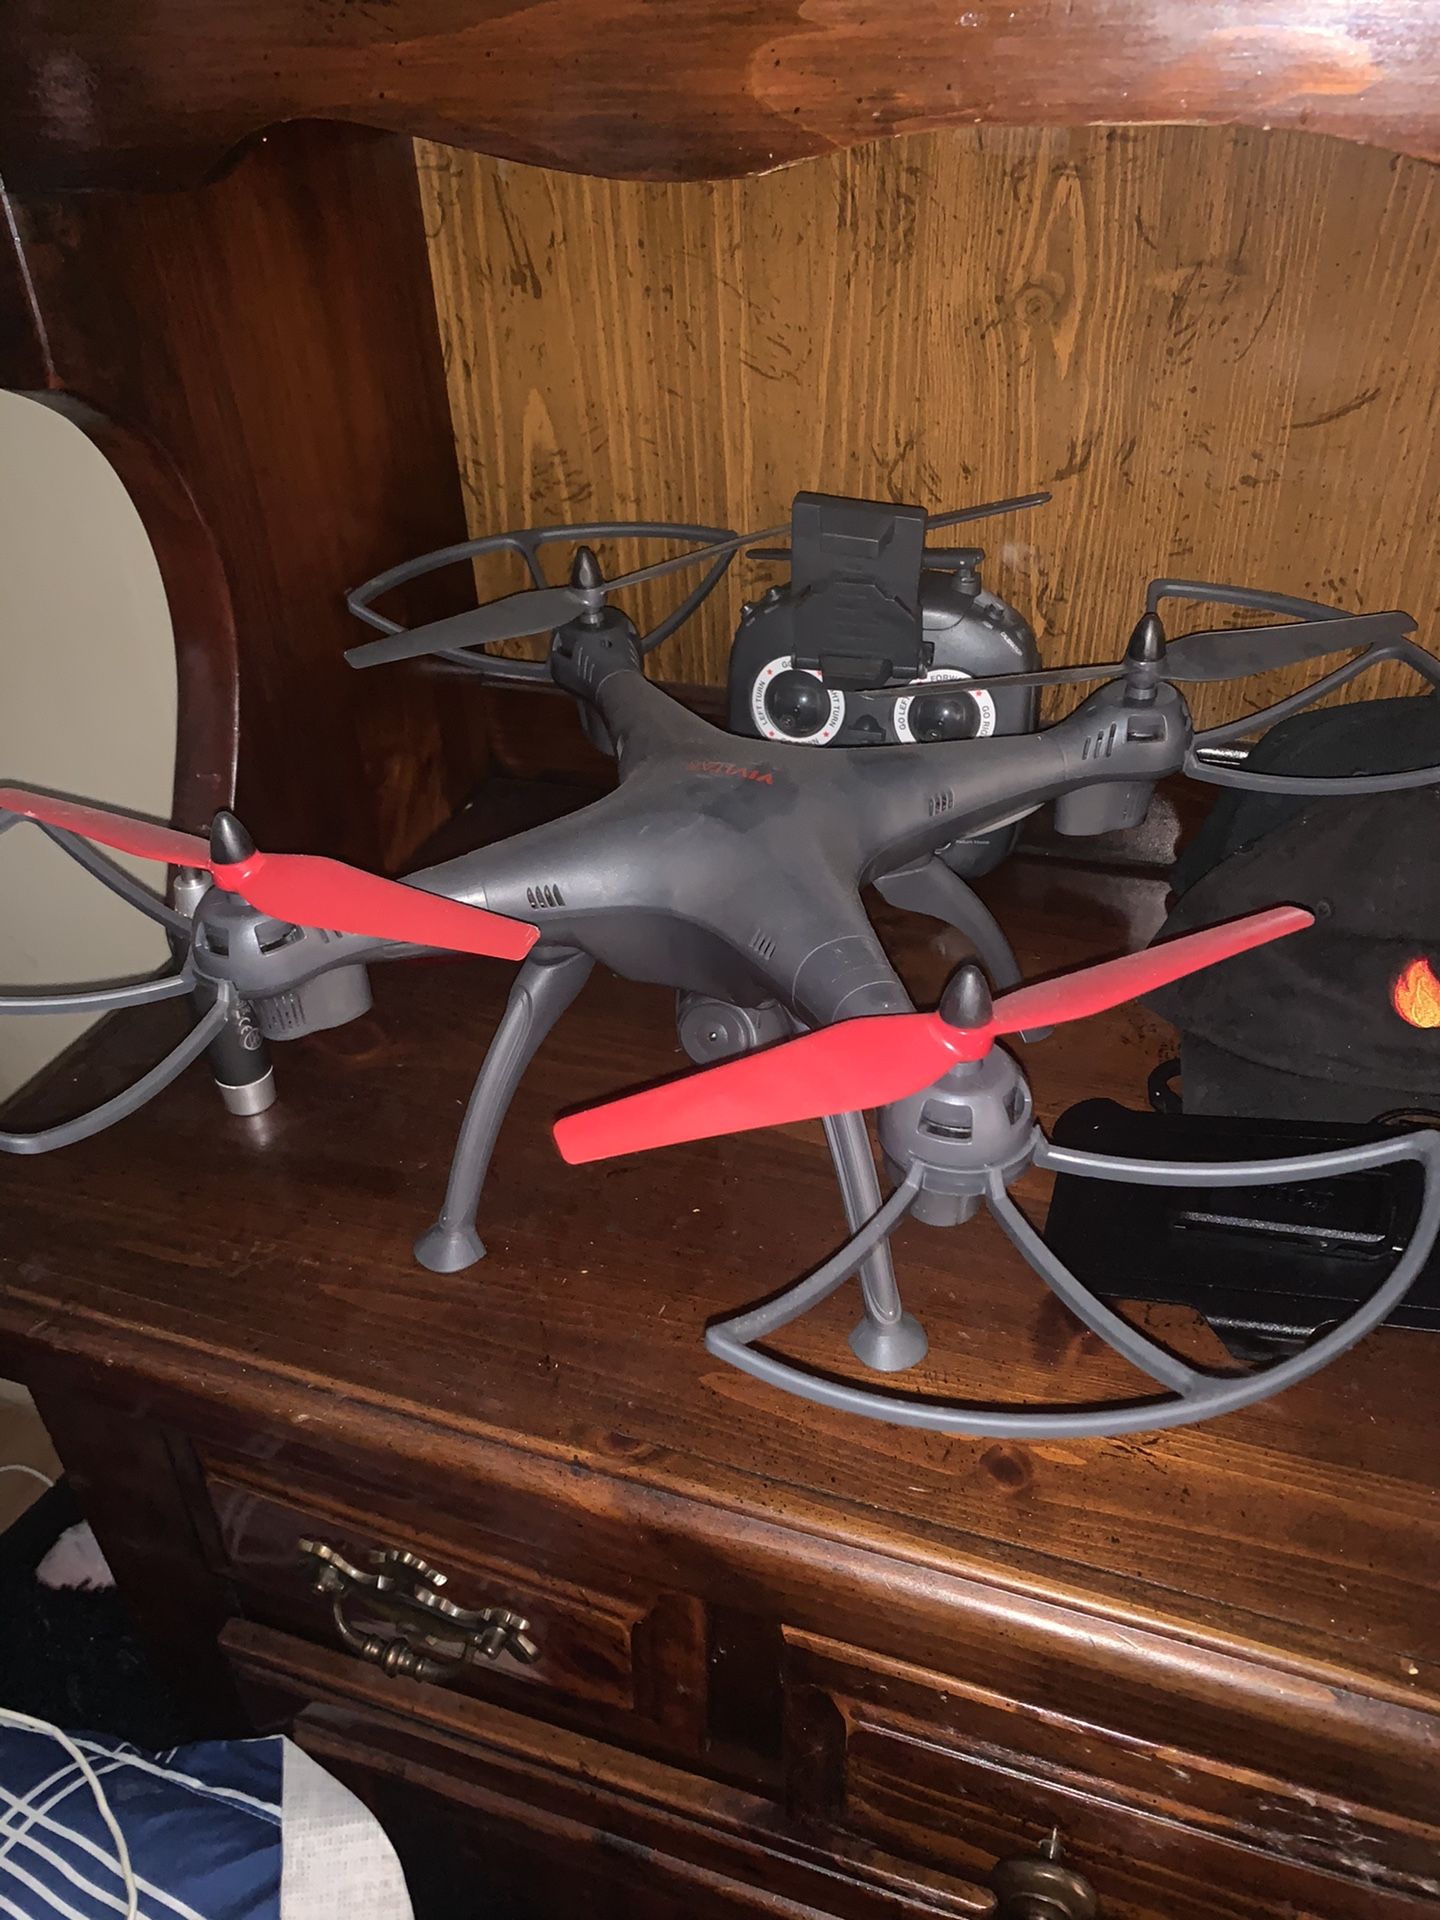 VIVITAR drone 2019